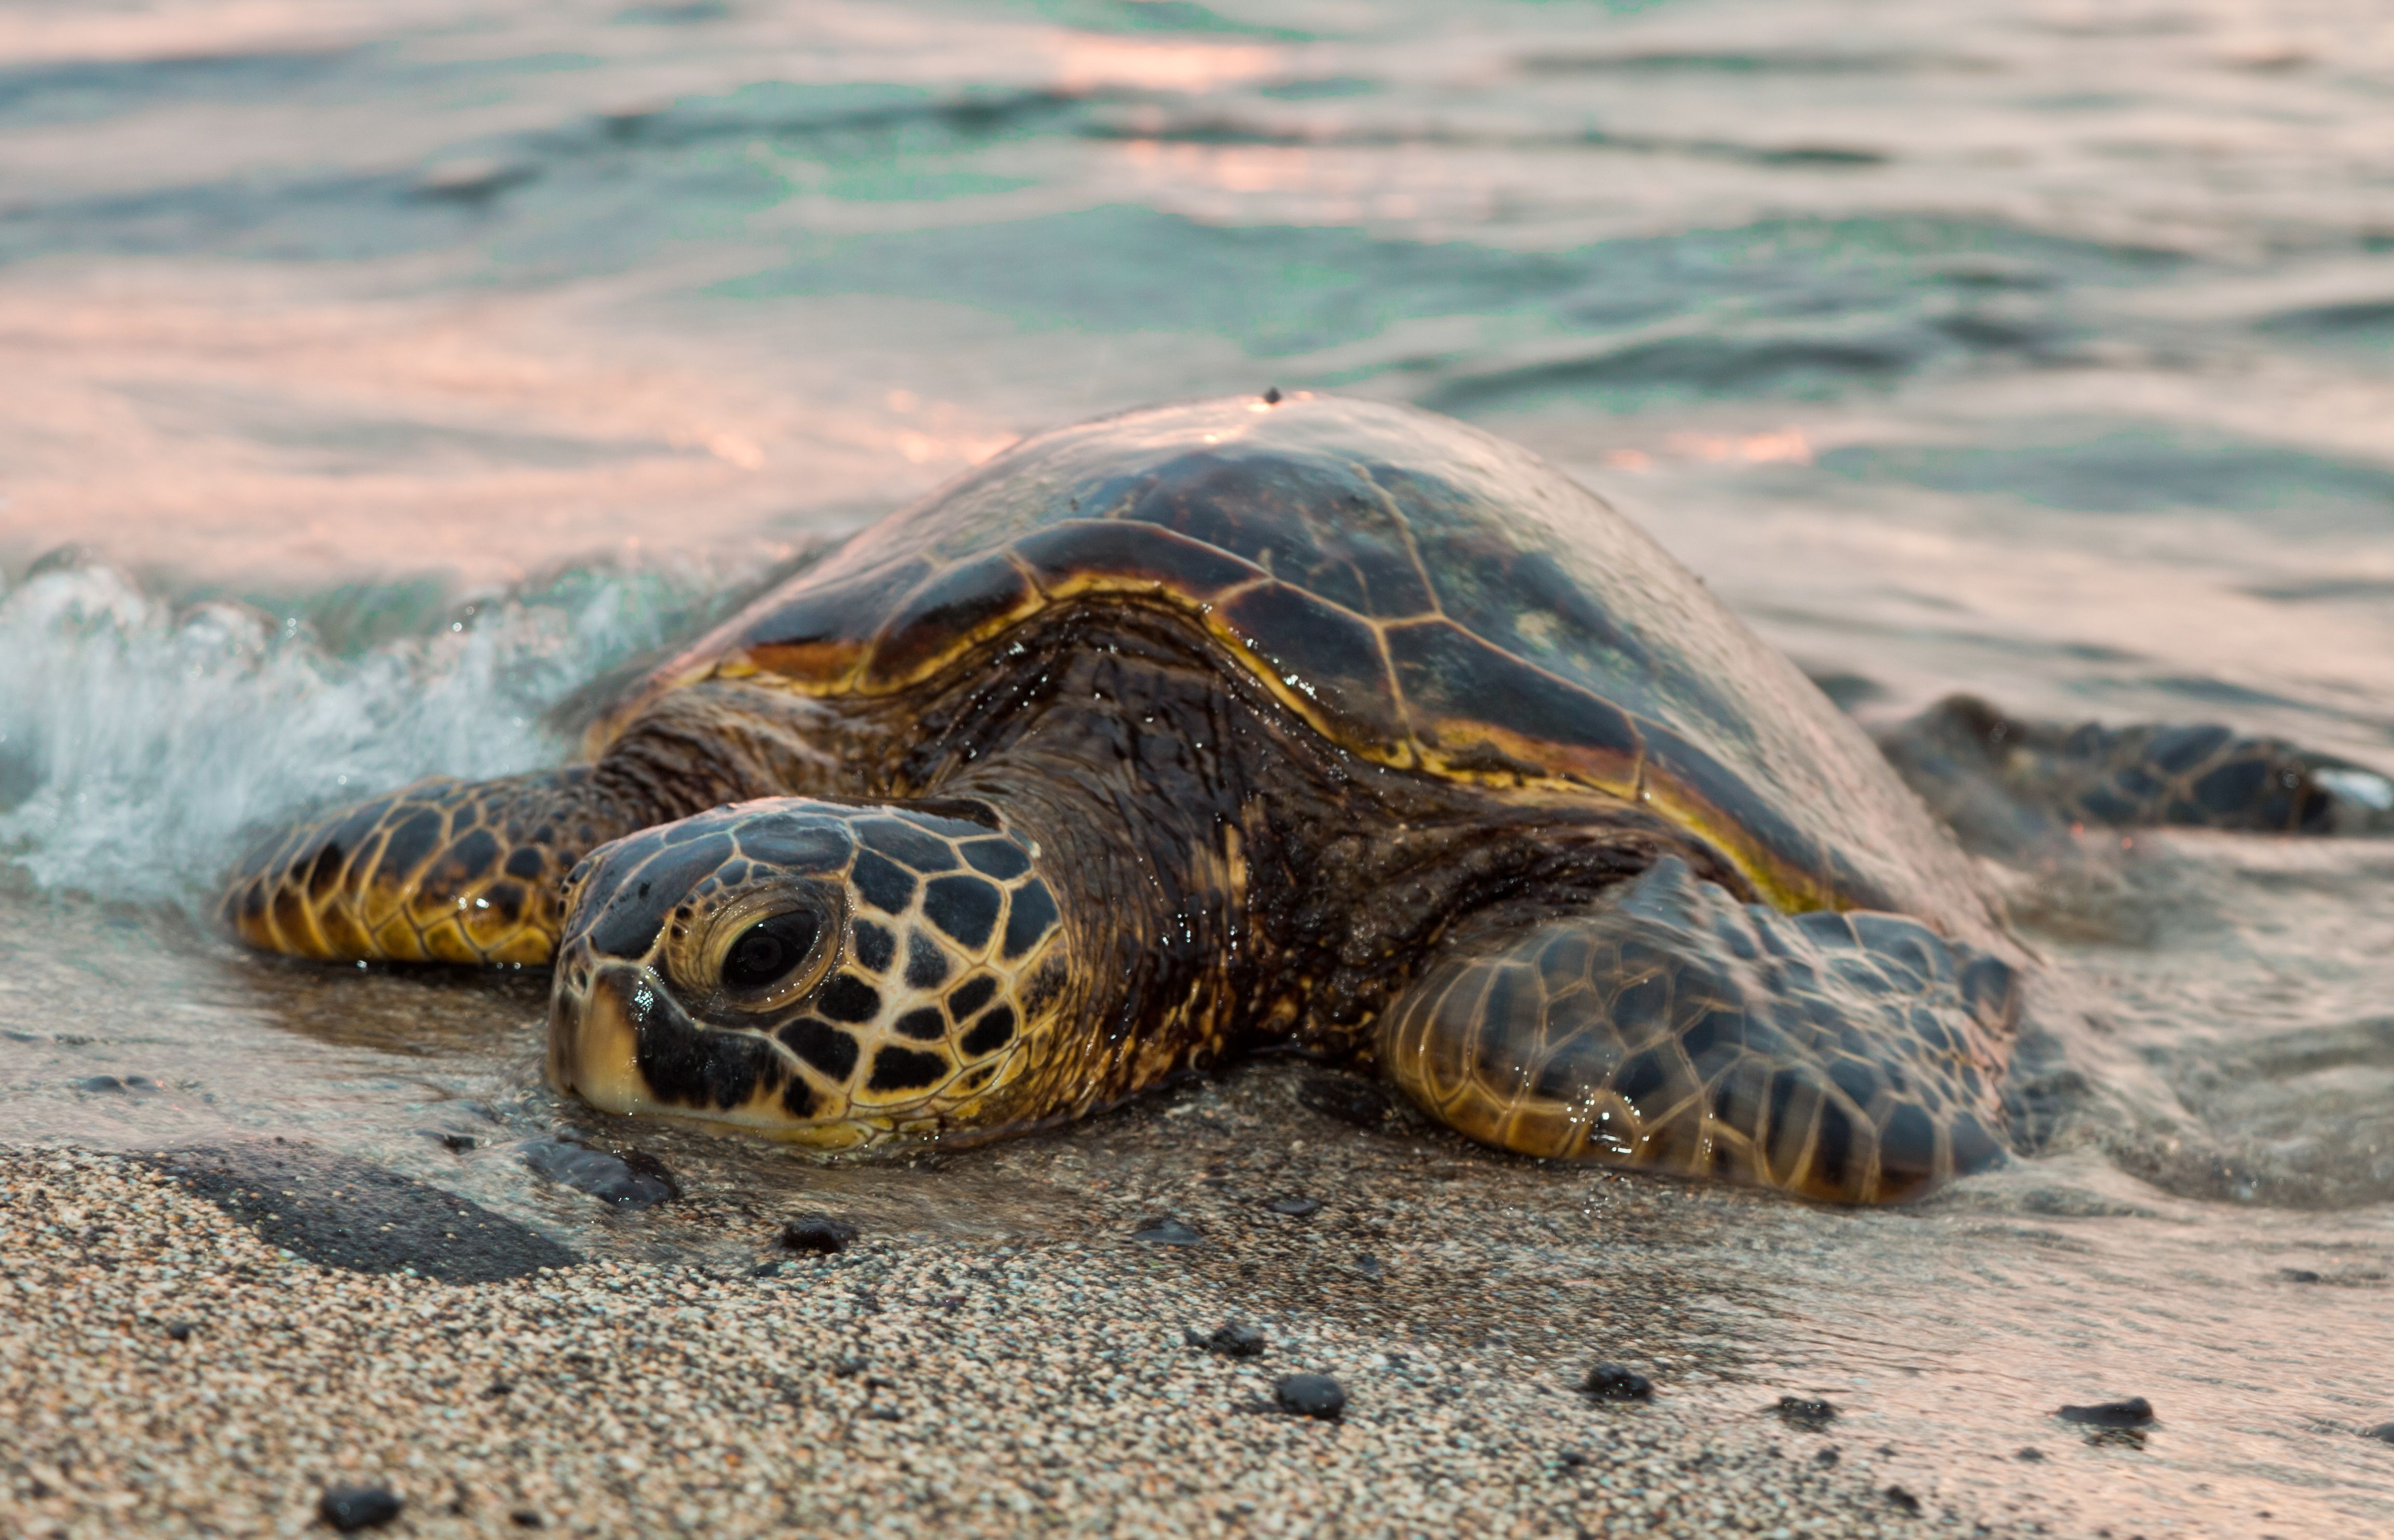 Sea Turtles in Peril